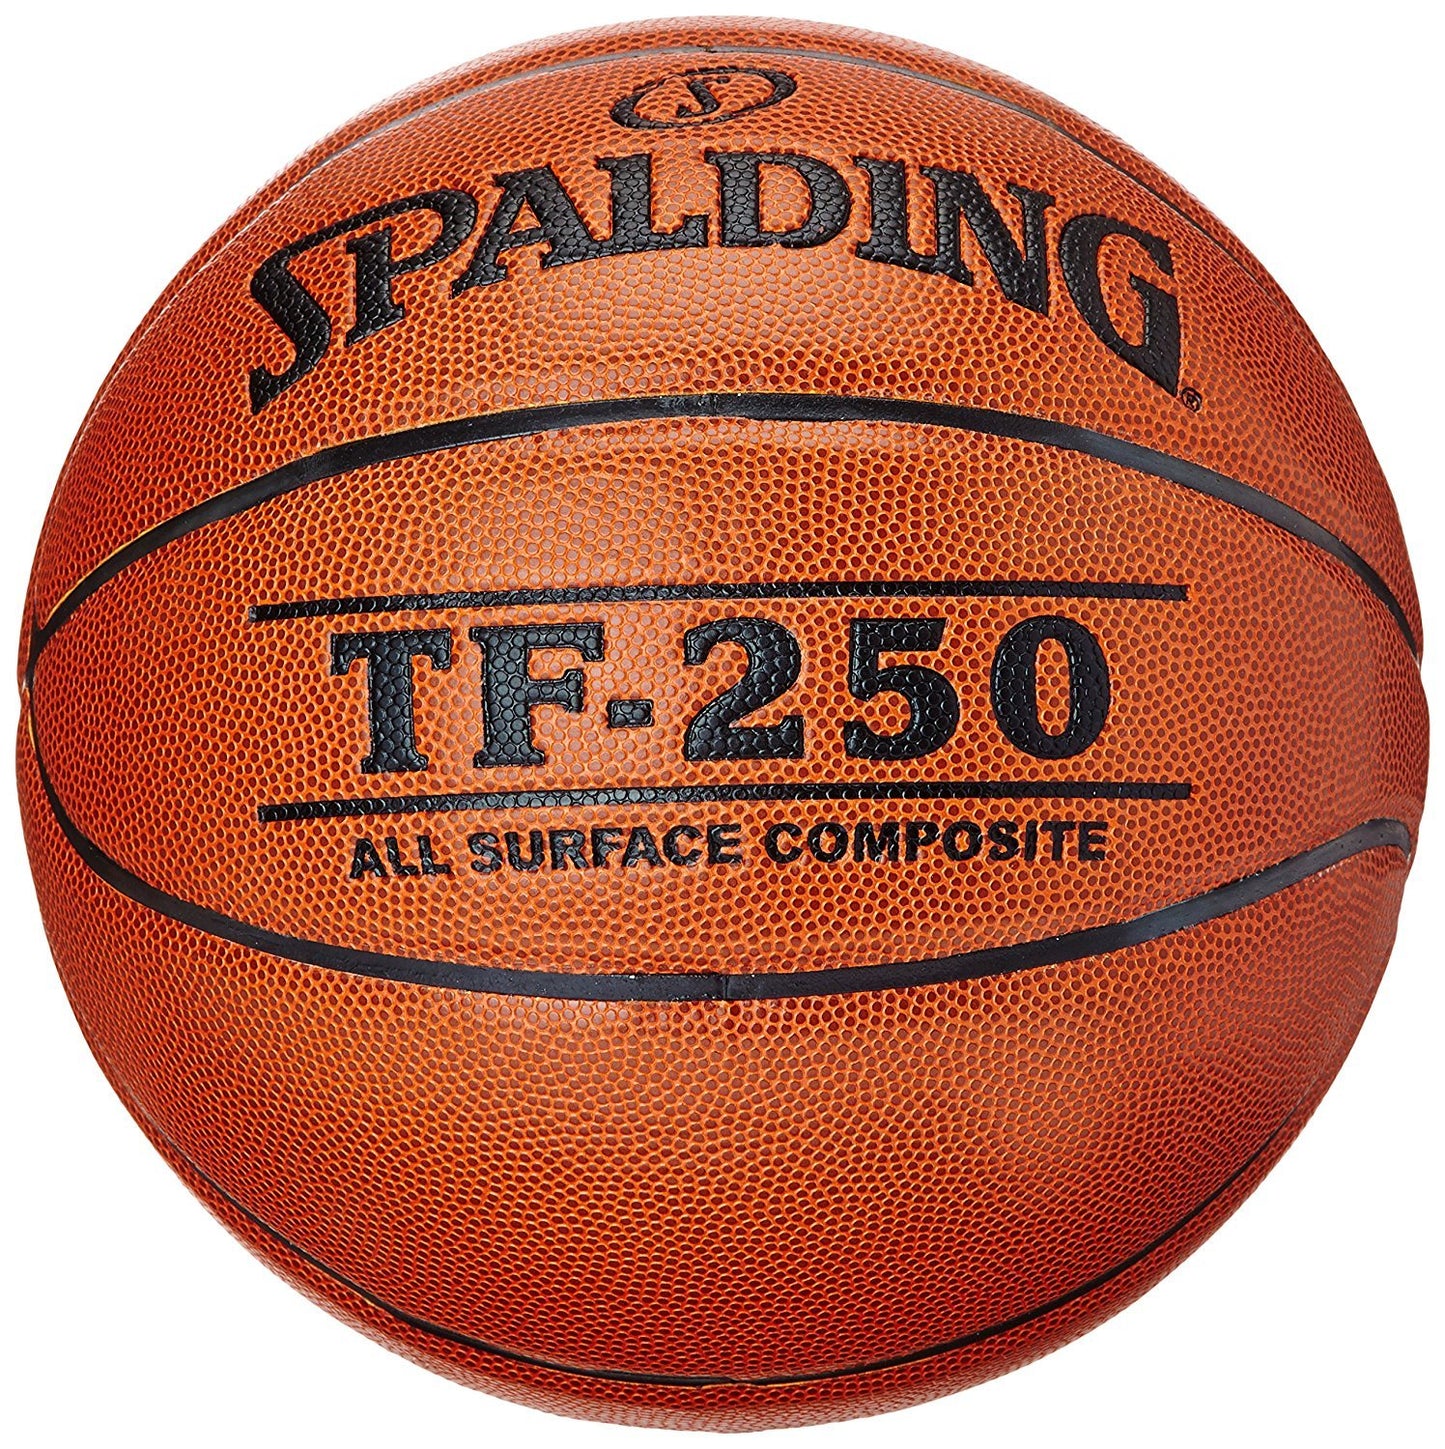 Spalding TF250 Indoor/Outdoor Basketball Size 6 - Best Price online Prokicksports.com